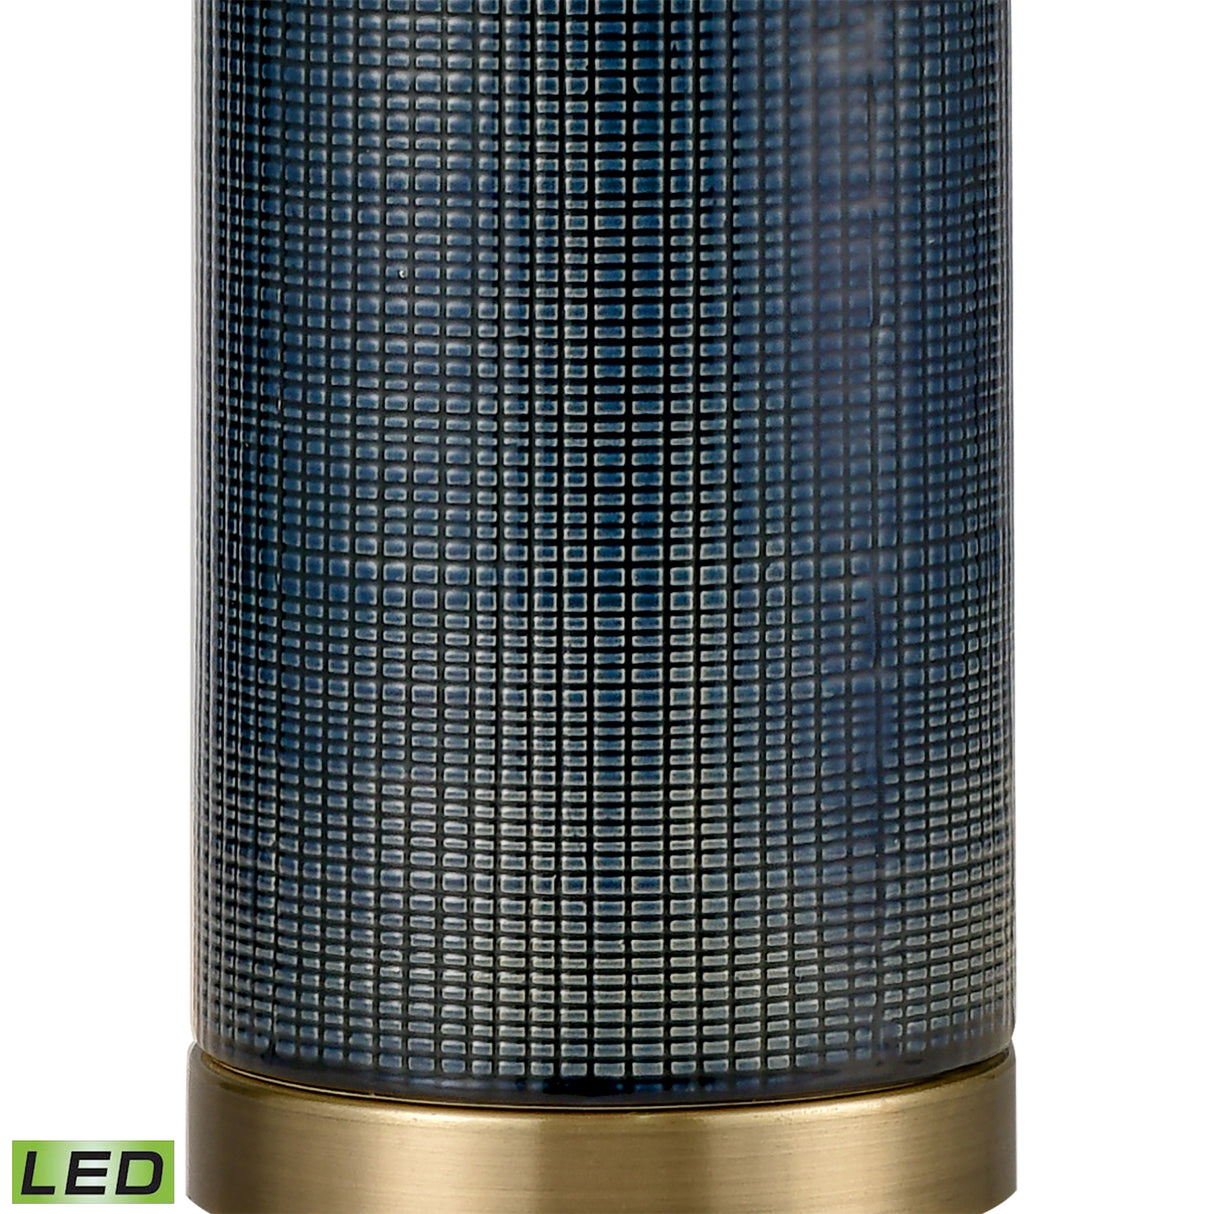 Elk 77185-LED Concettas 28'' High 1-Light Table Lamp - Navy - Includes LED Bulb